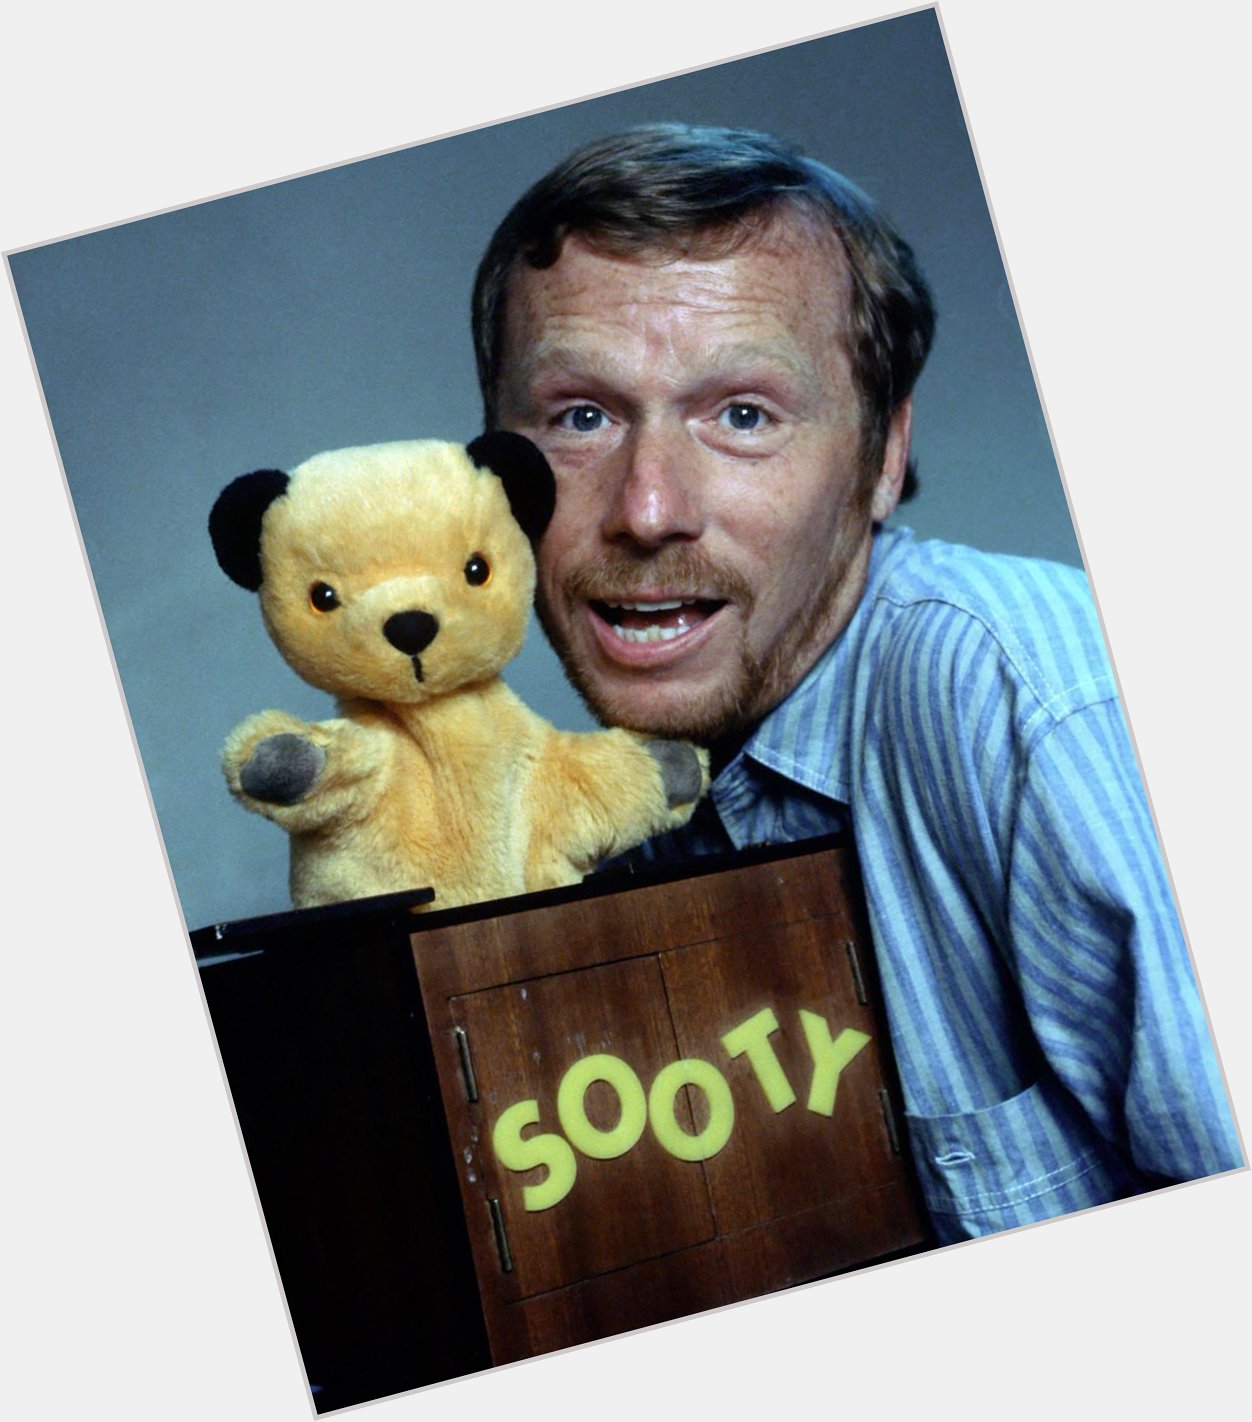 Happy birthday to Matthew Corbett! The son of Harry Corbett and presenter of Sooty between 1976-1998. 